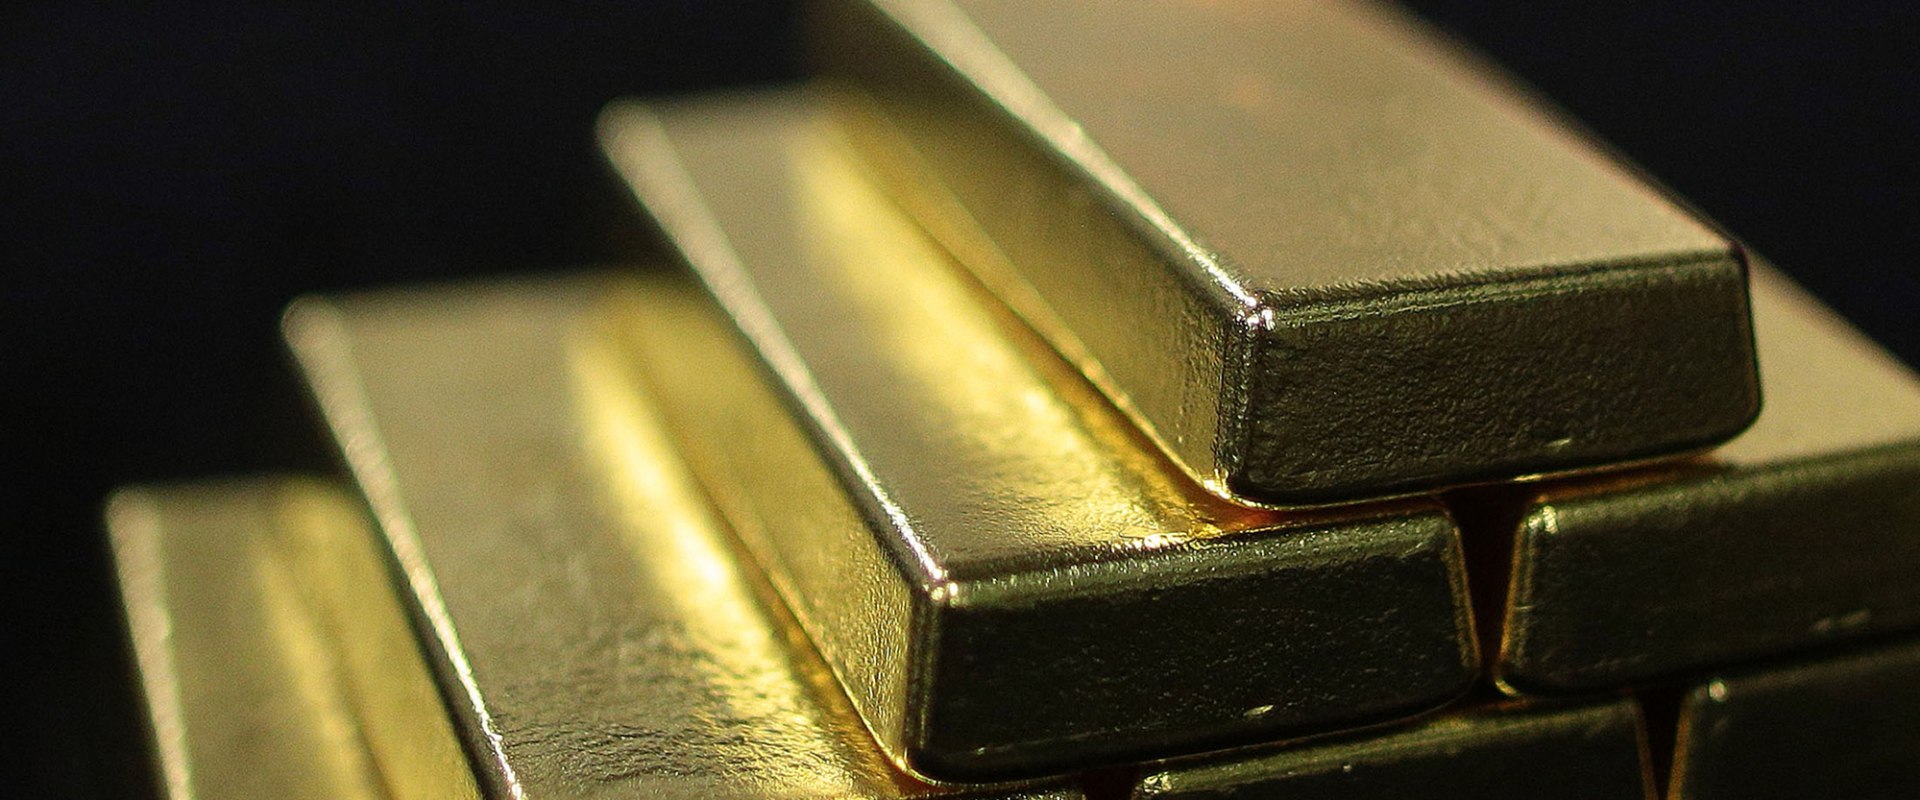 Are precious metals commodities?